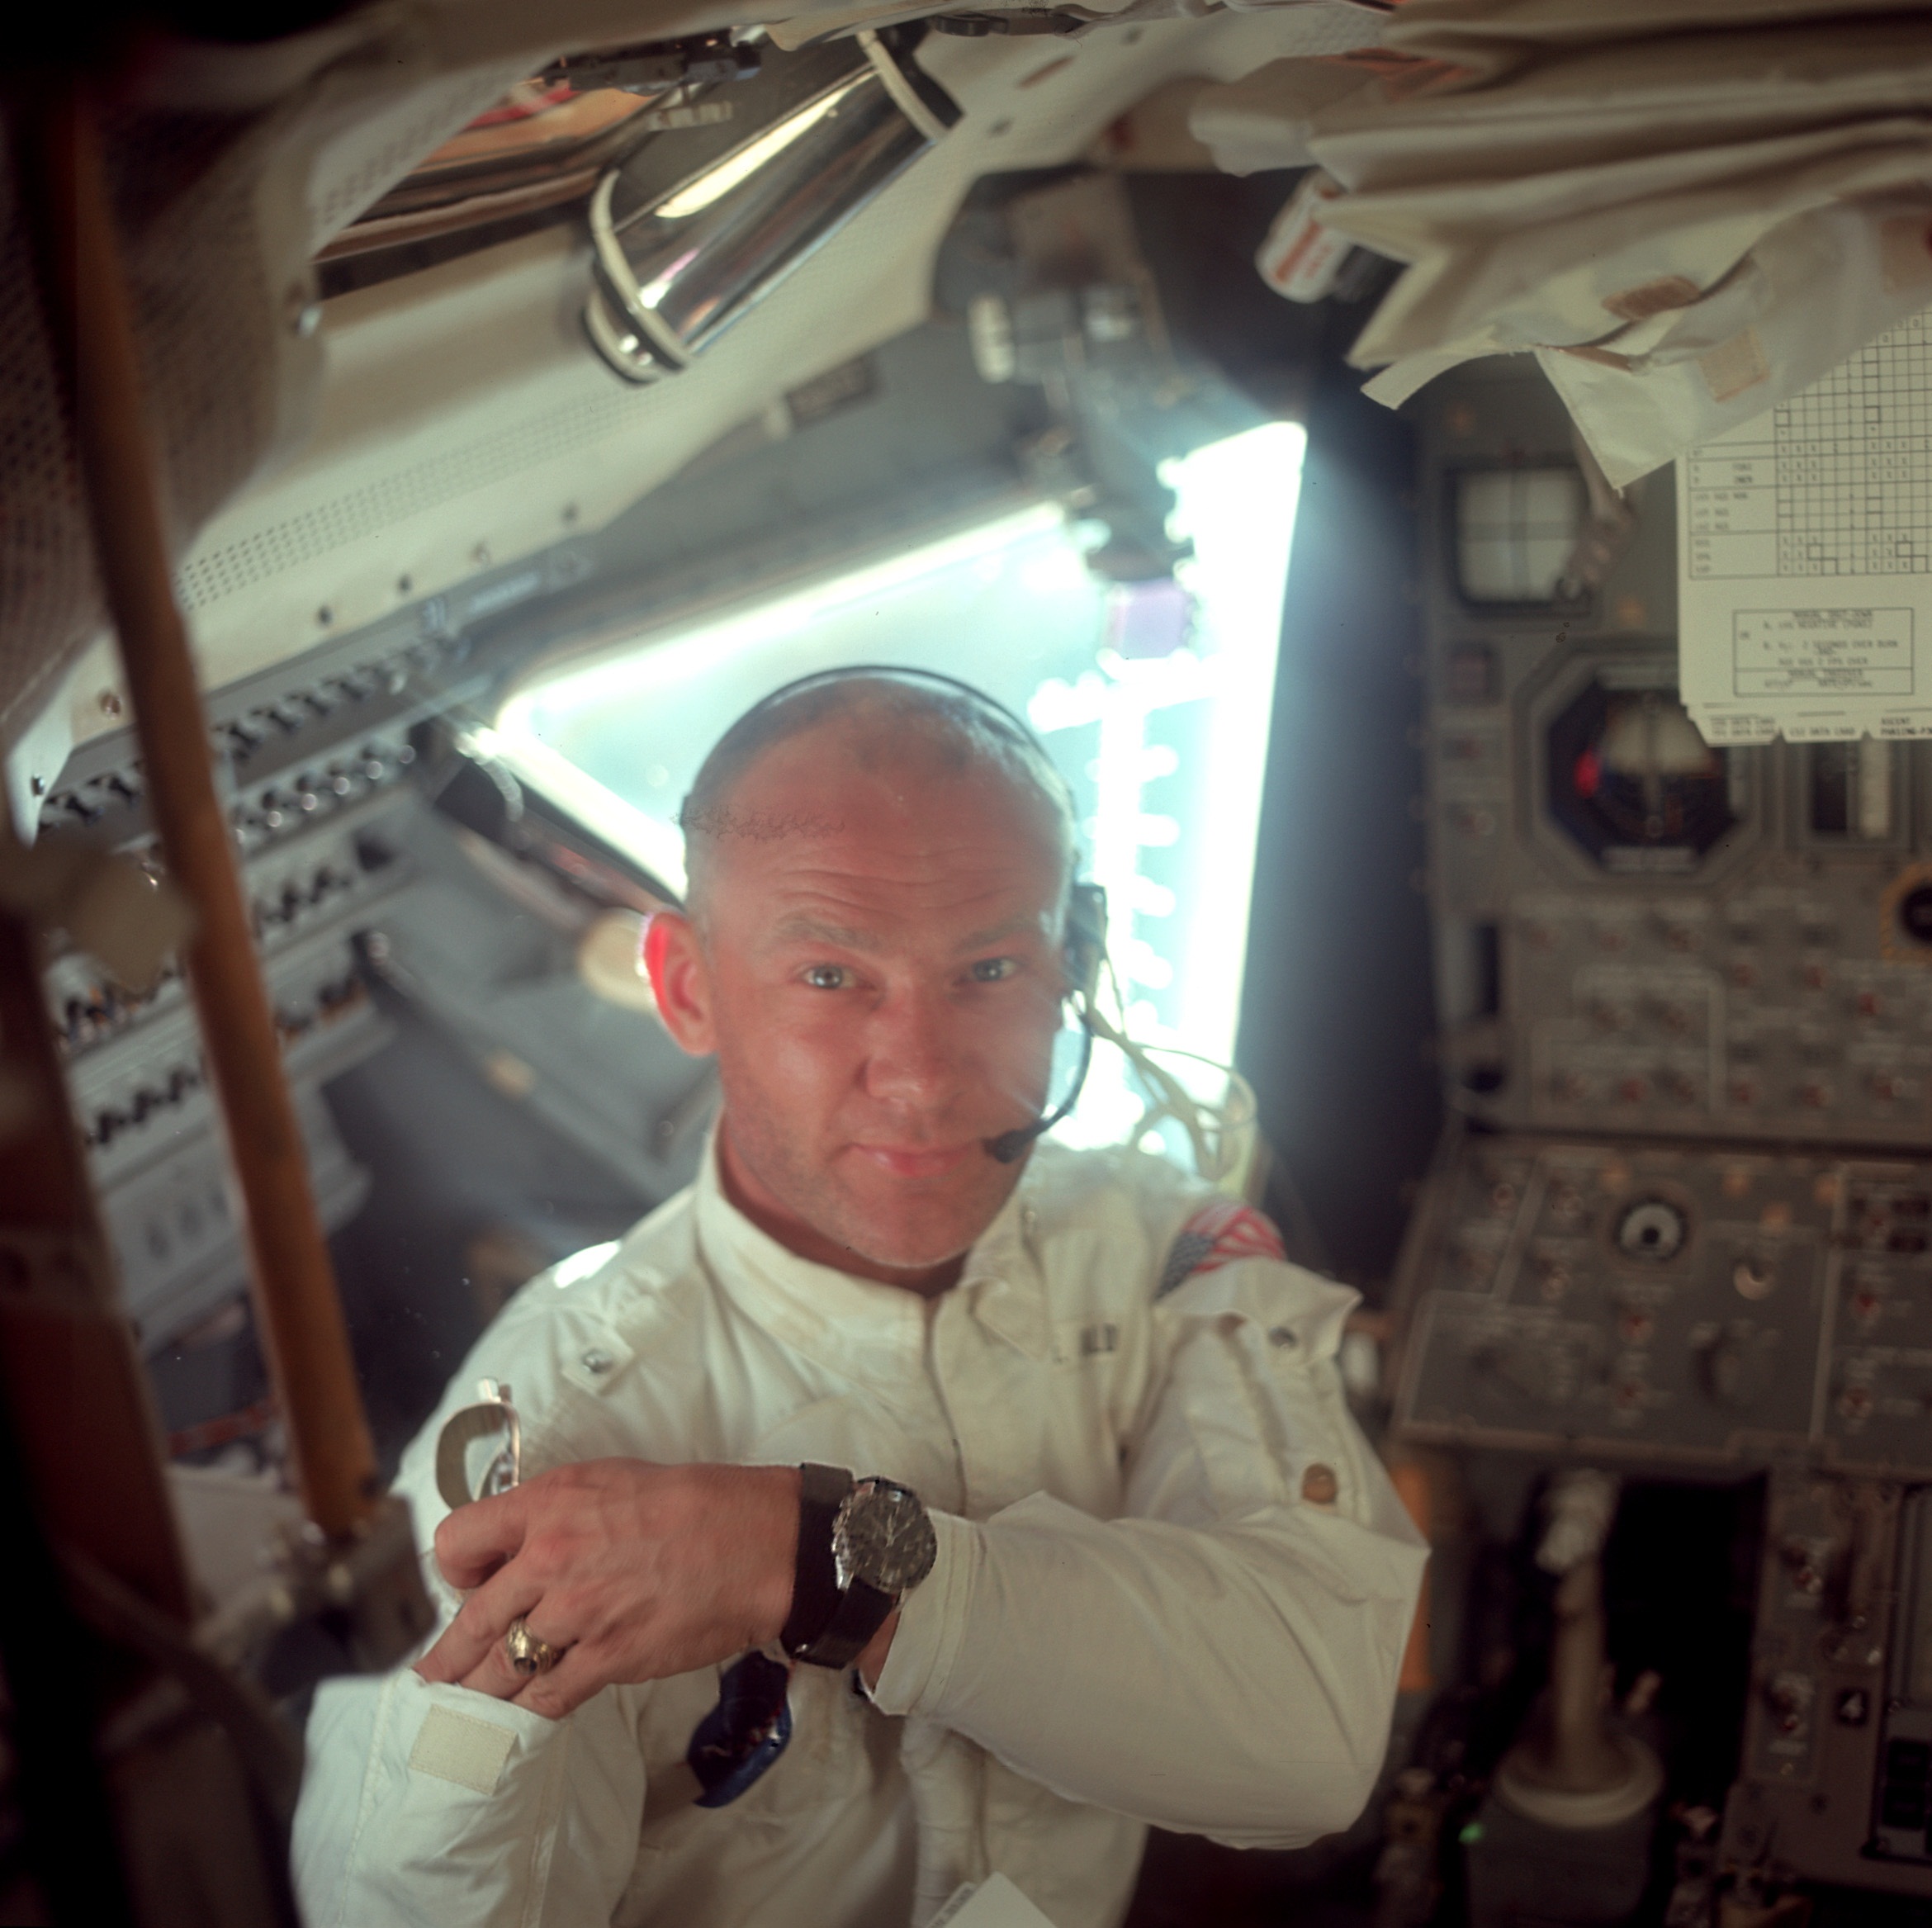 Astronaut on spaceship wearing Omega Speedmaster.